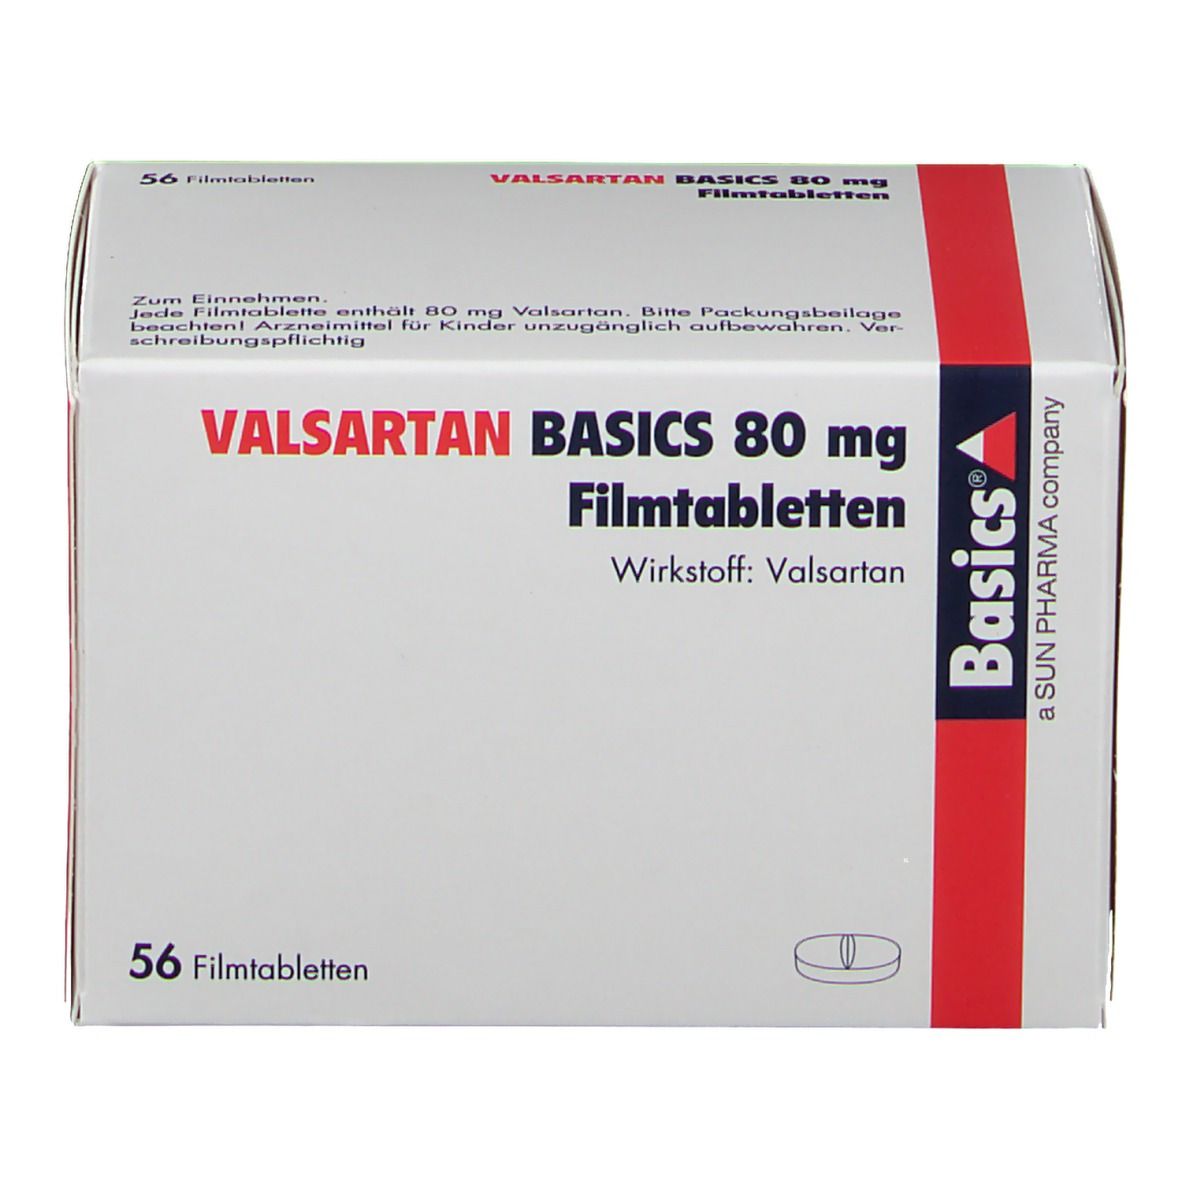 VALSARTAN BASICS 80 mg